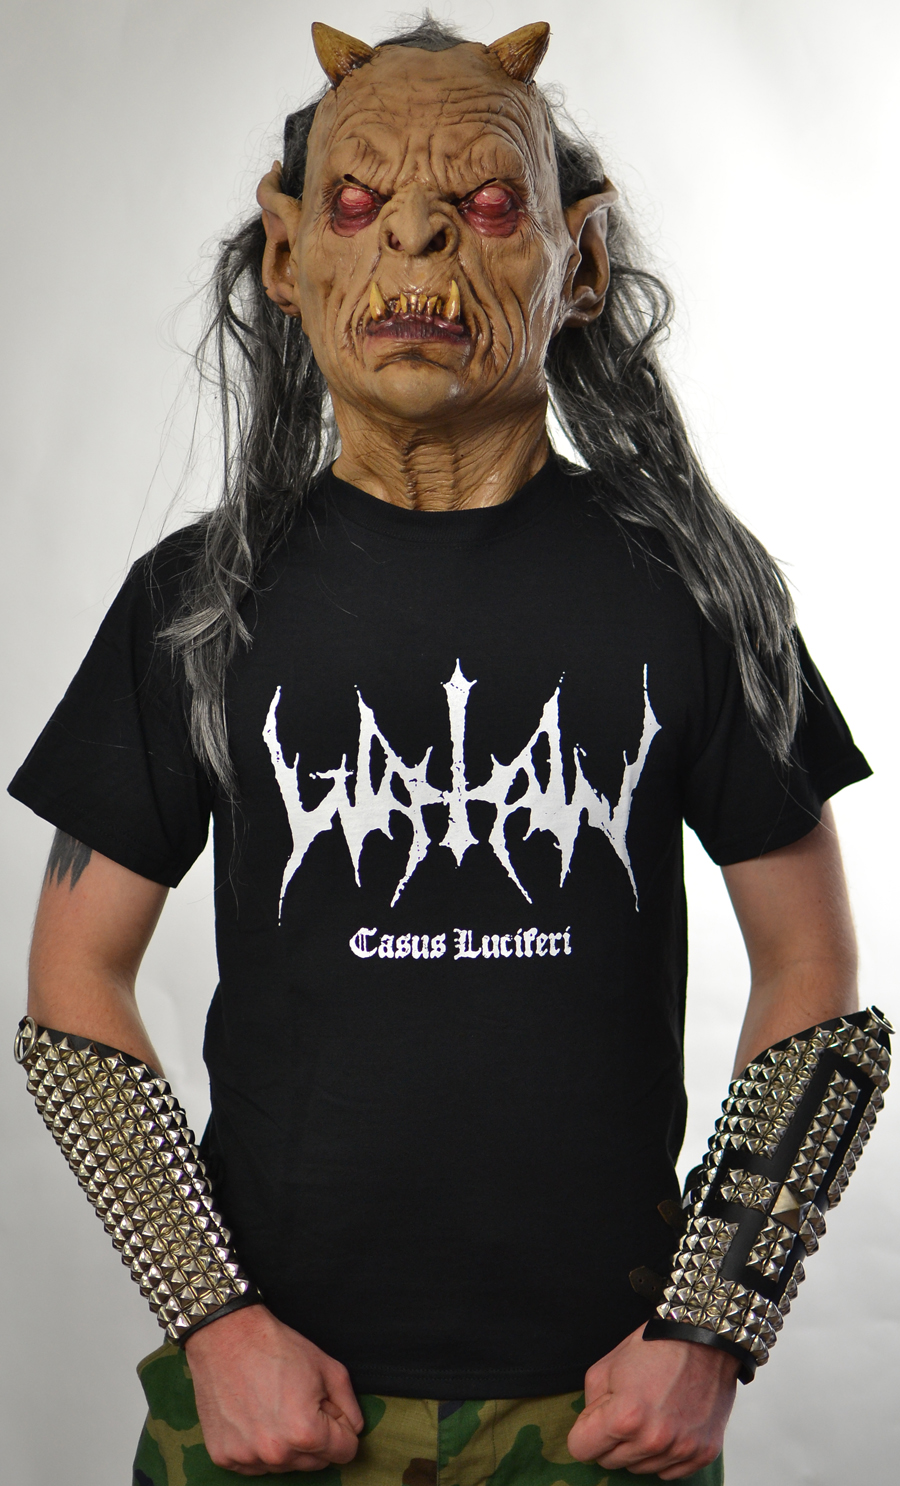 WATAIN - Logo / Casus Luciferi (T-Shirt / MEDIUM)